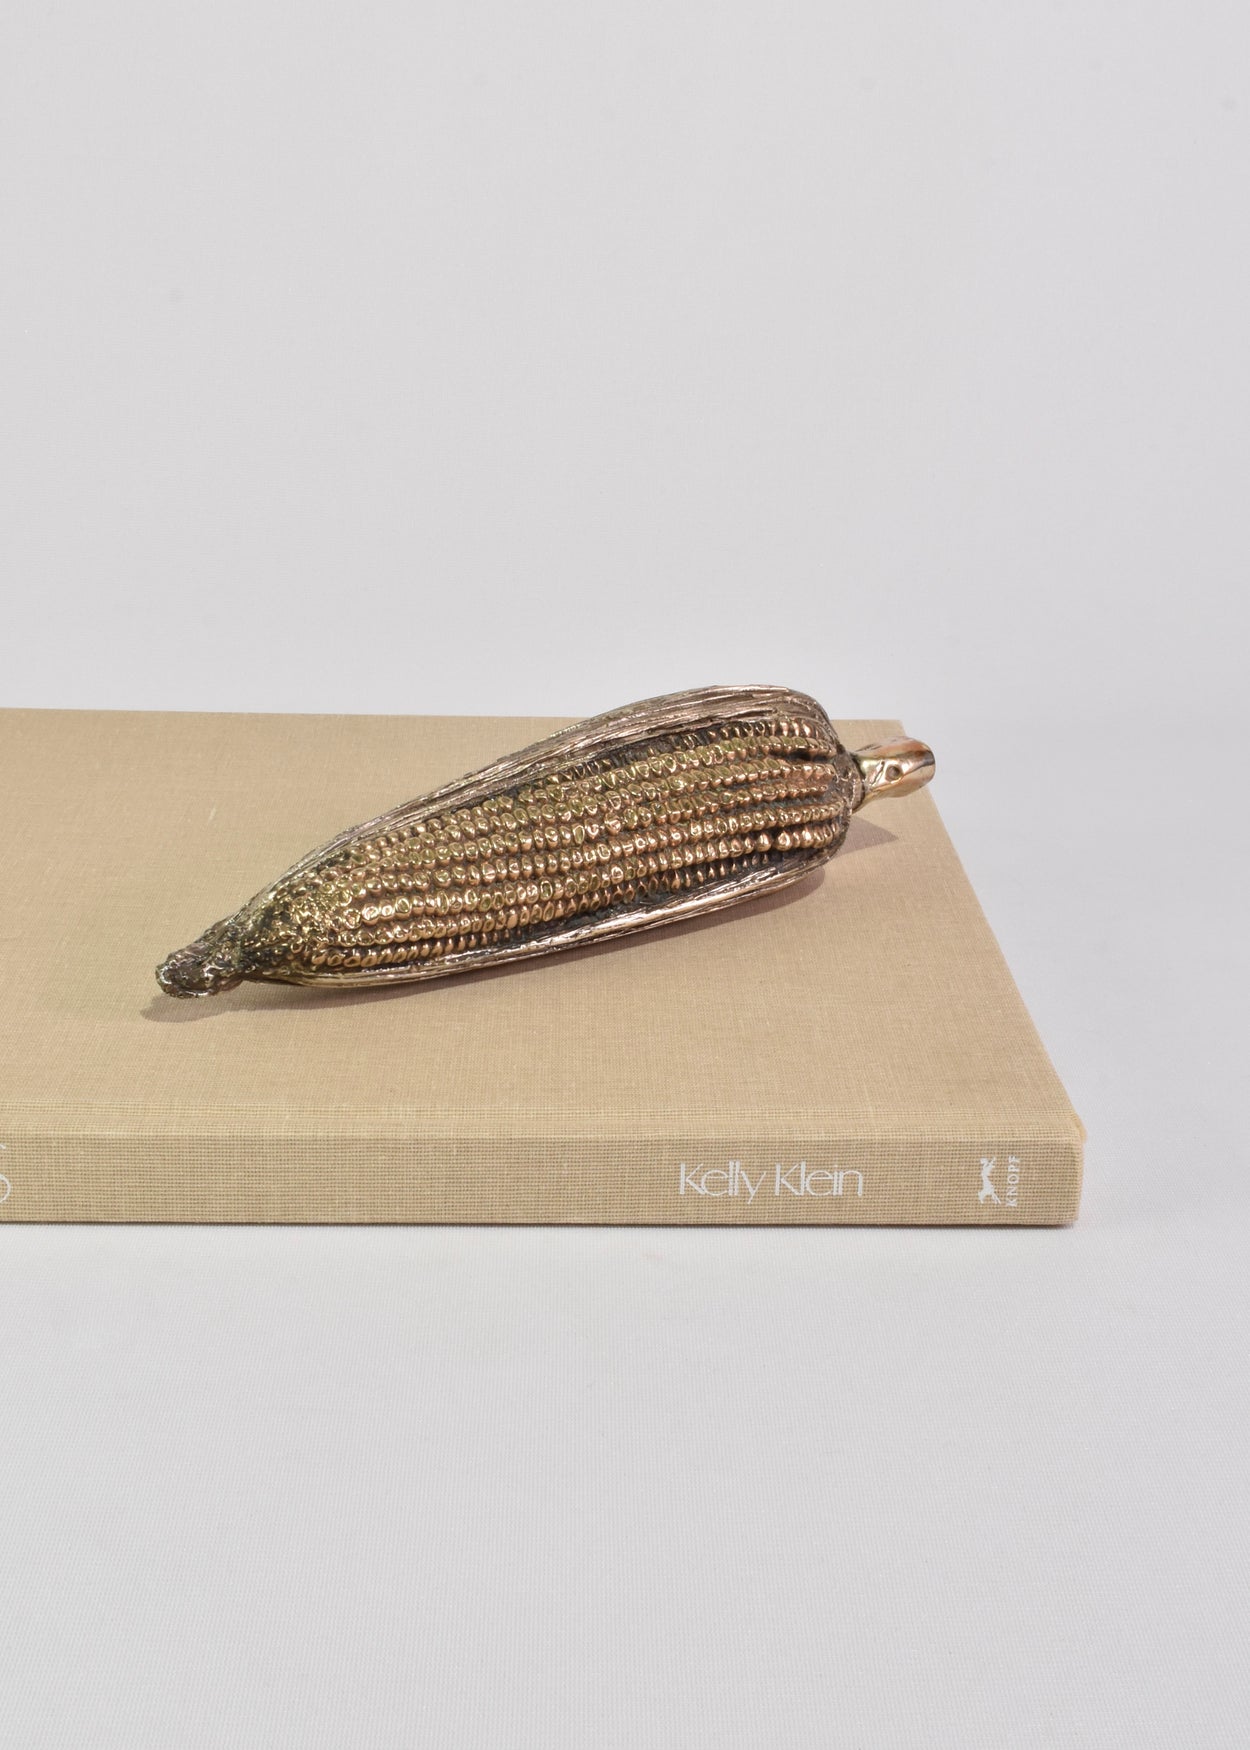 Corn Sculpture